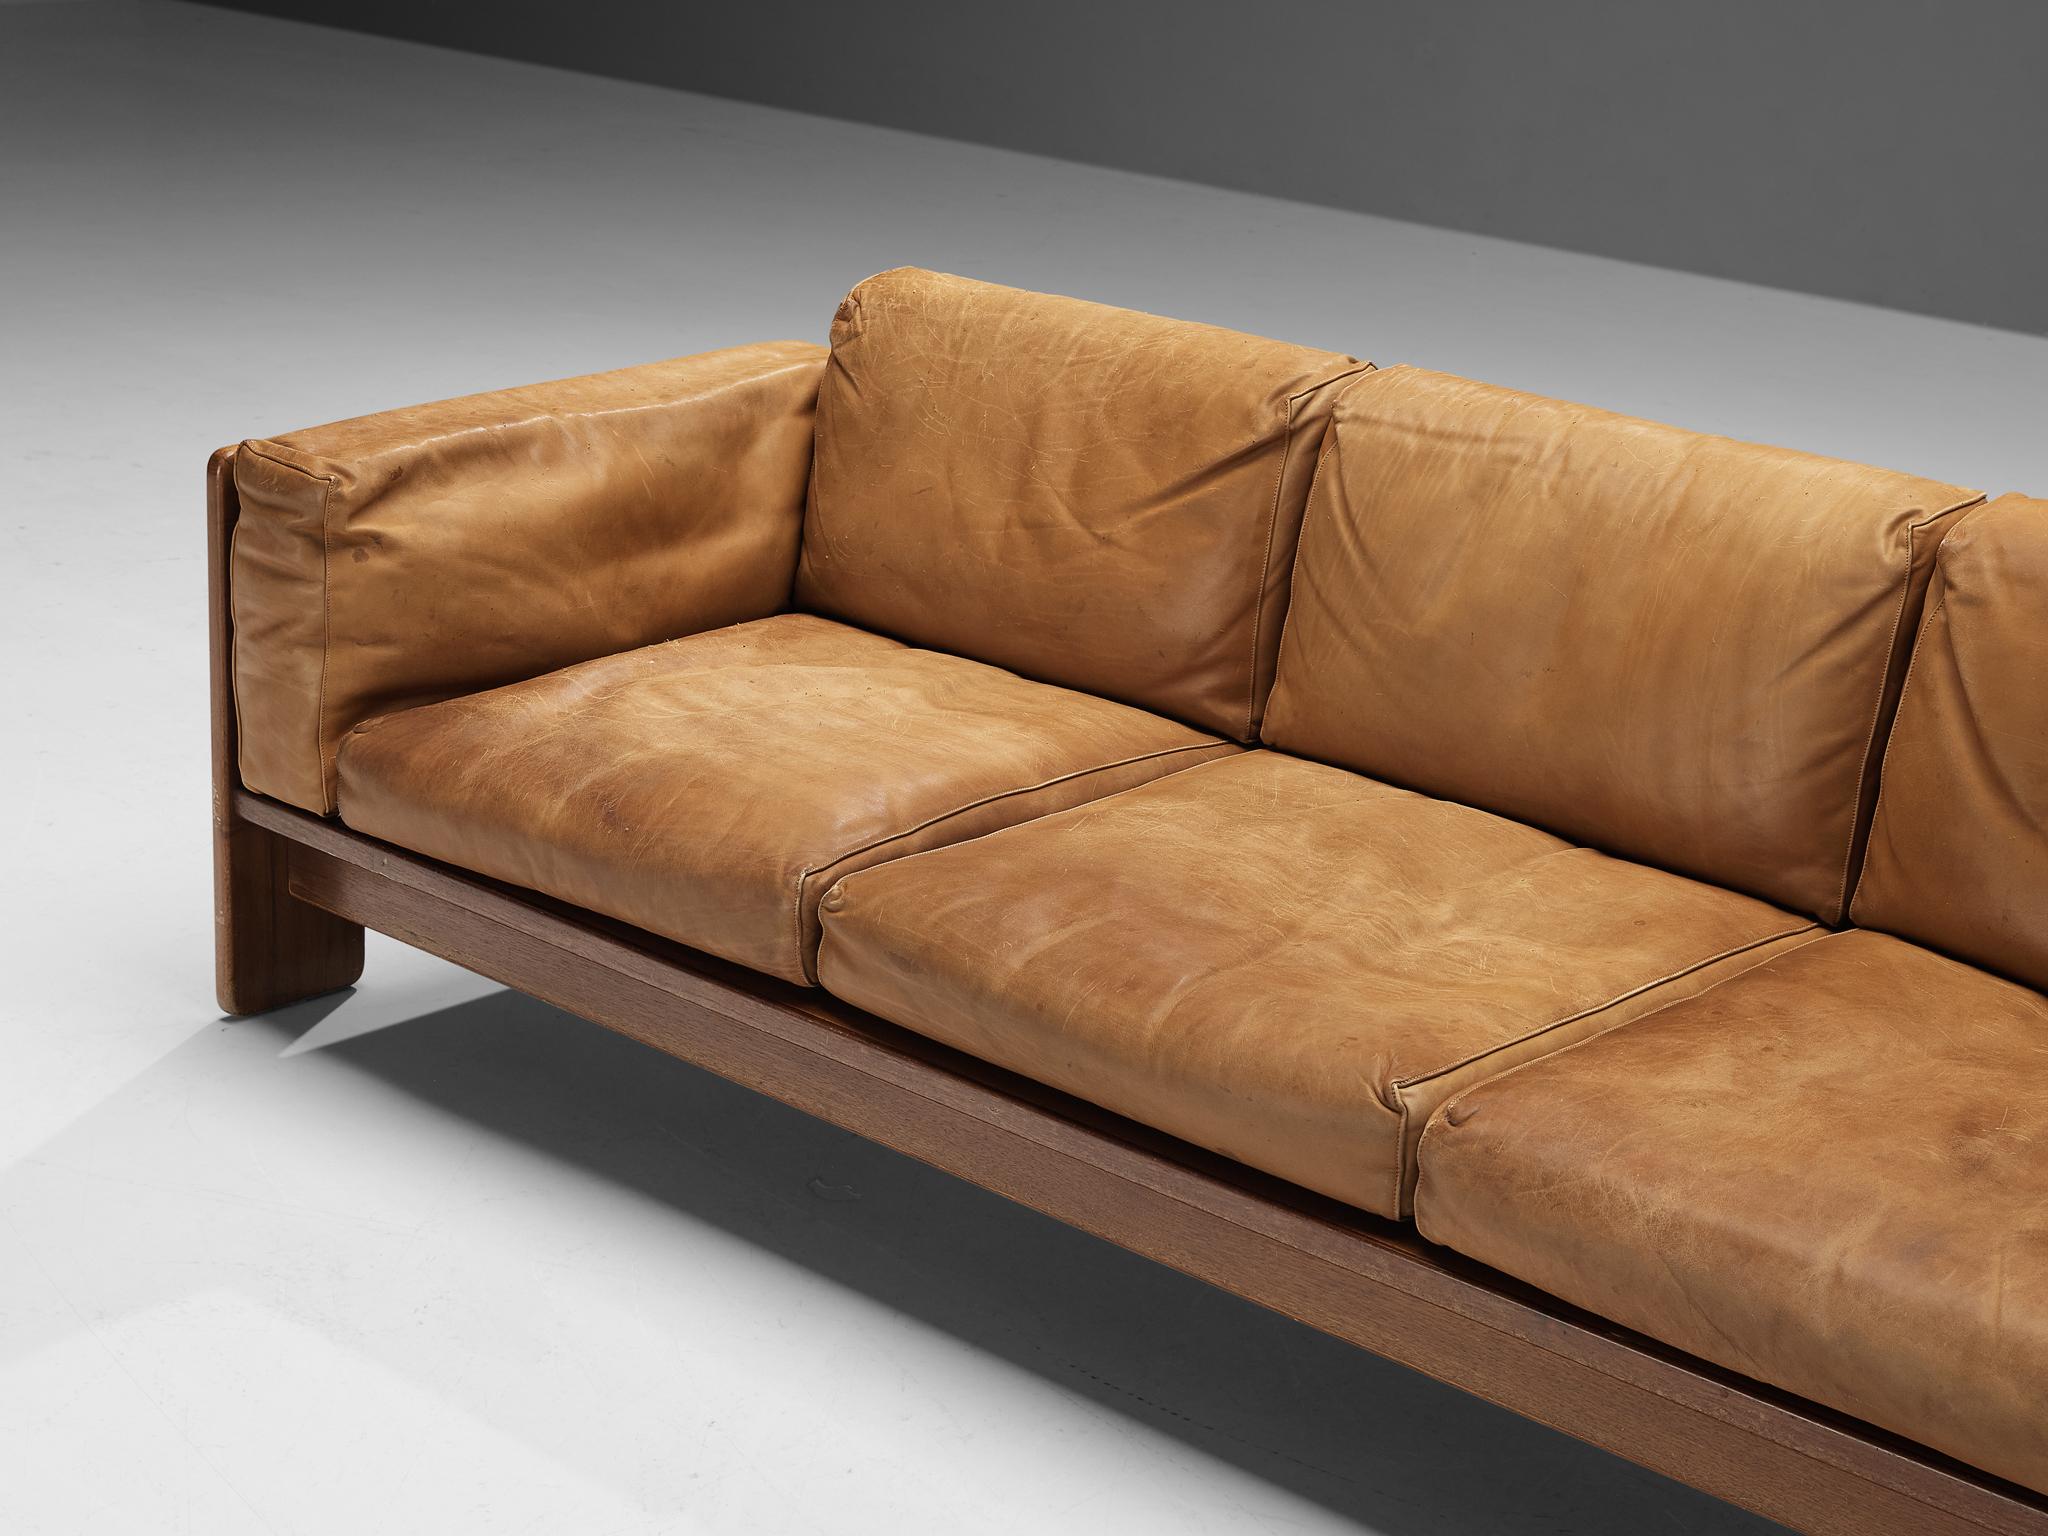 Afra & Tobia Scarpa for Gavina 'Bastiano' Sofa in Patinated Brown Leather 2